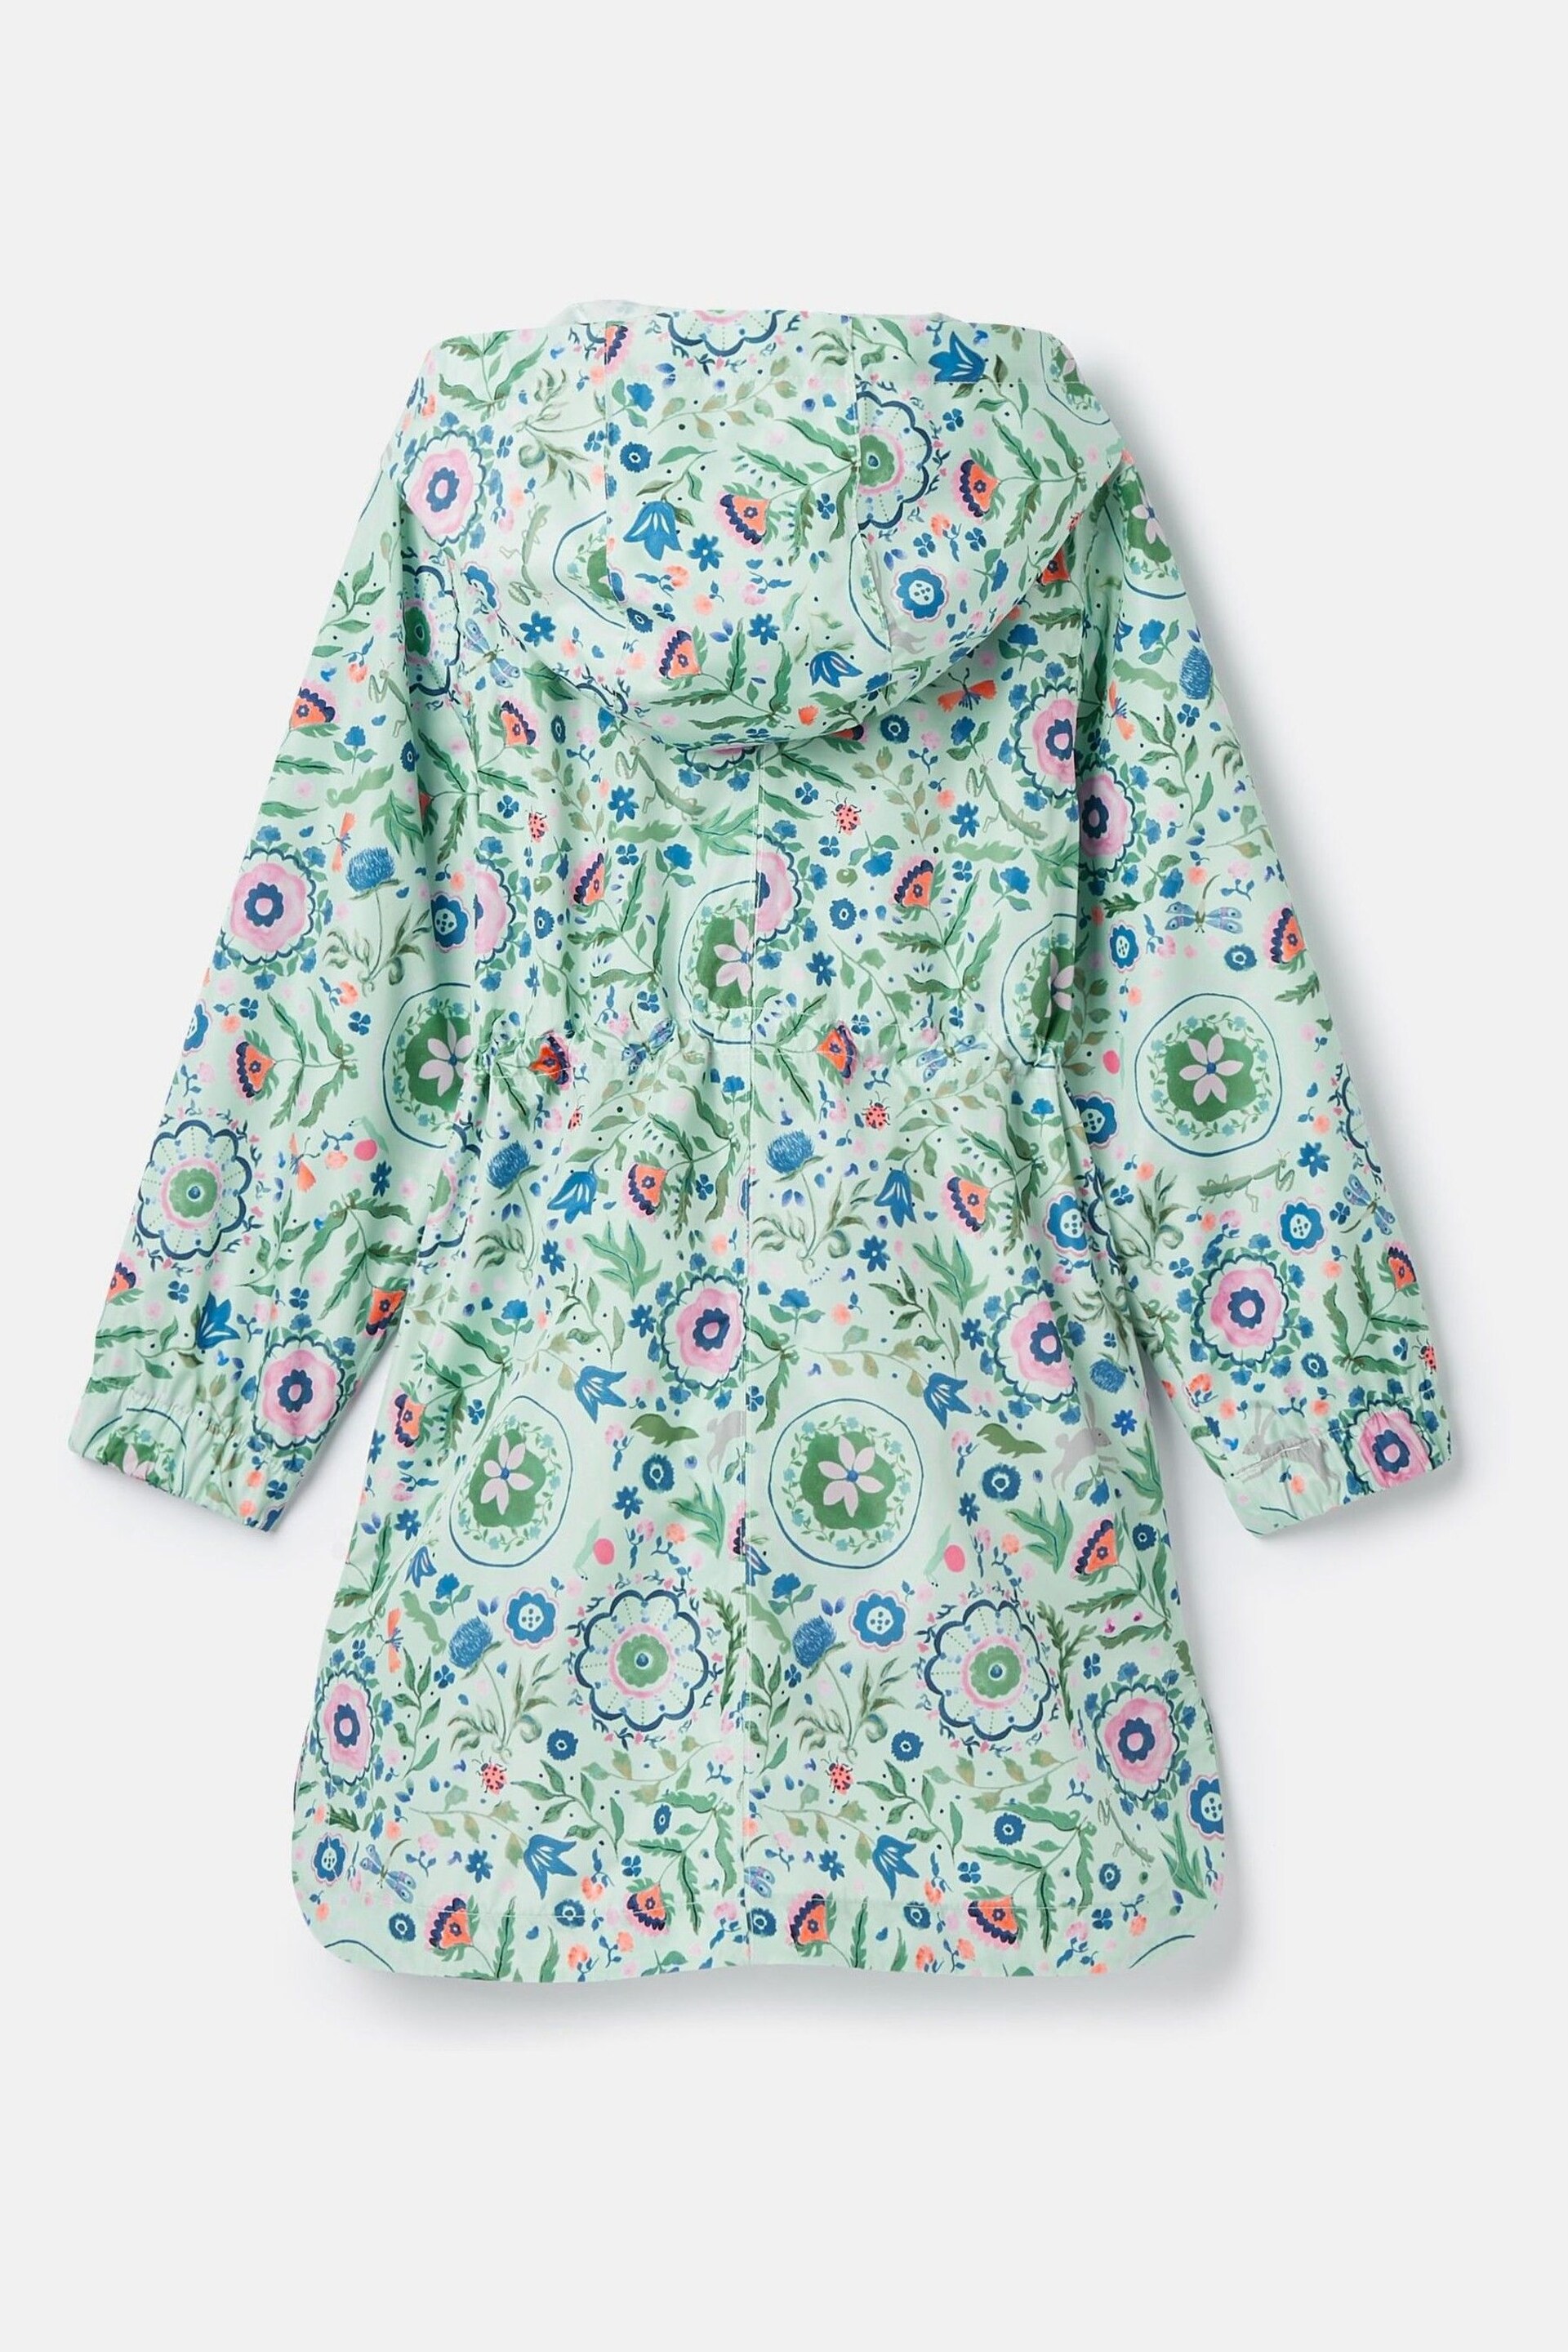 Joules Rainford Green Floral Waterproof Packable Raincoat With Hood - Image 2 of 8